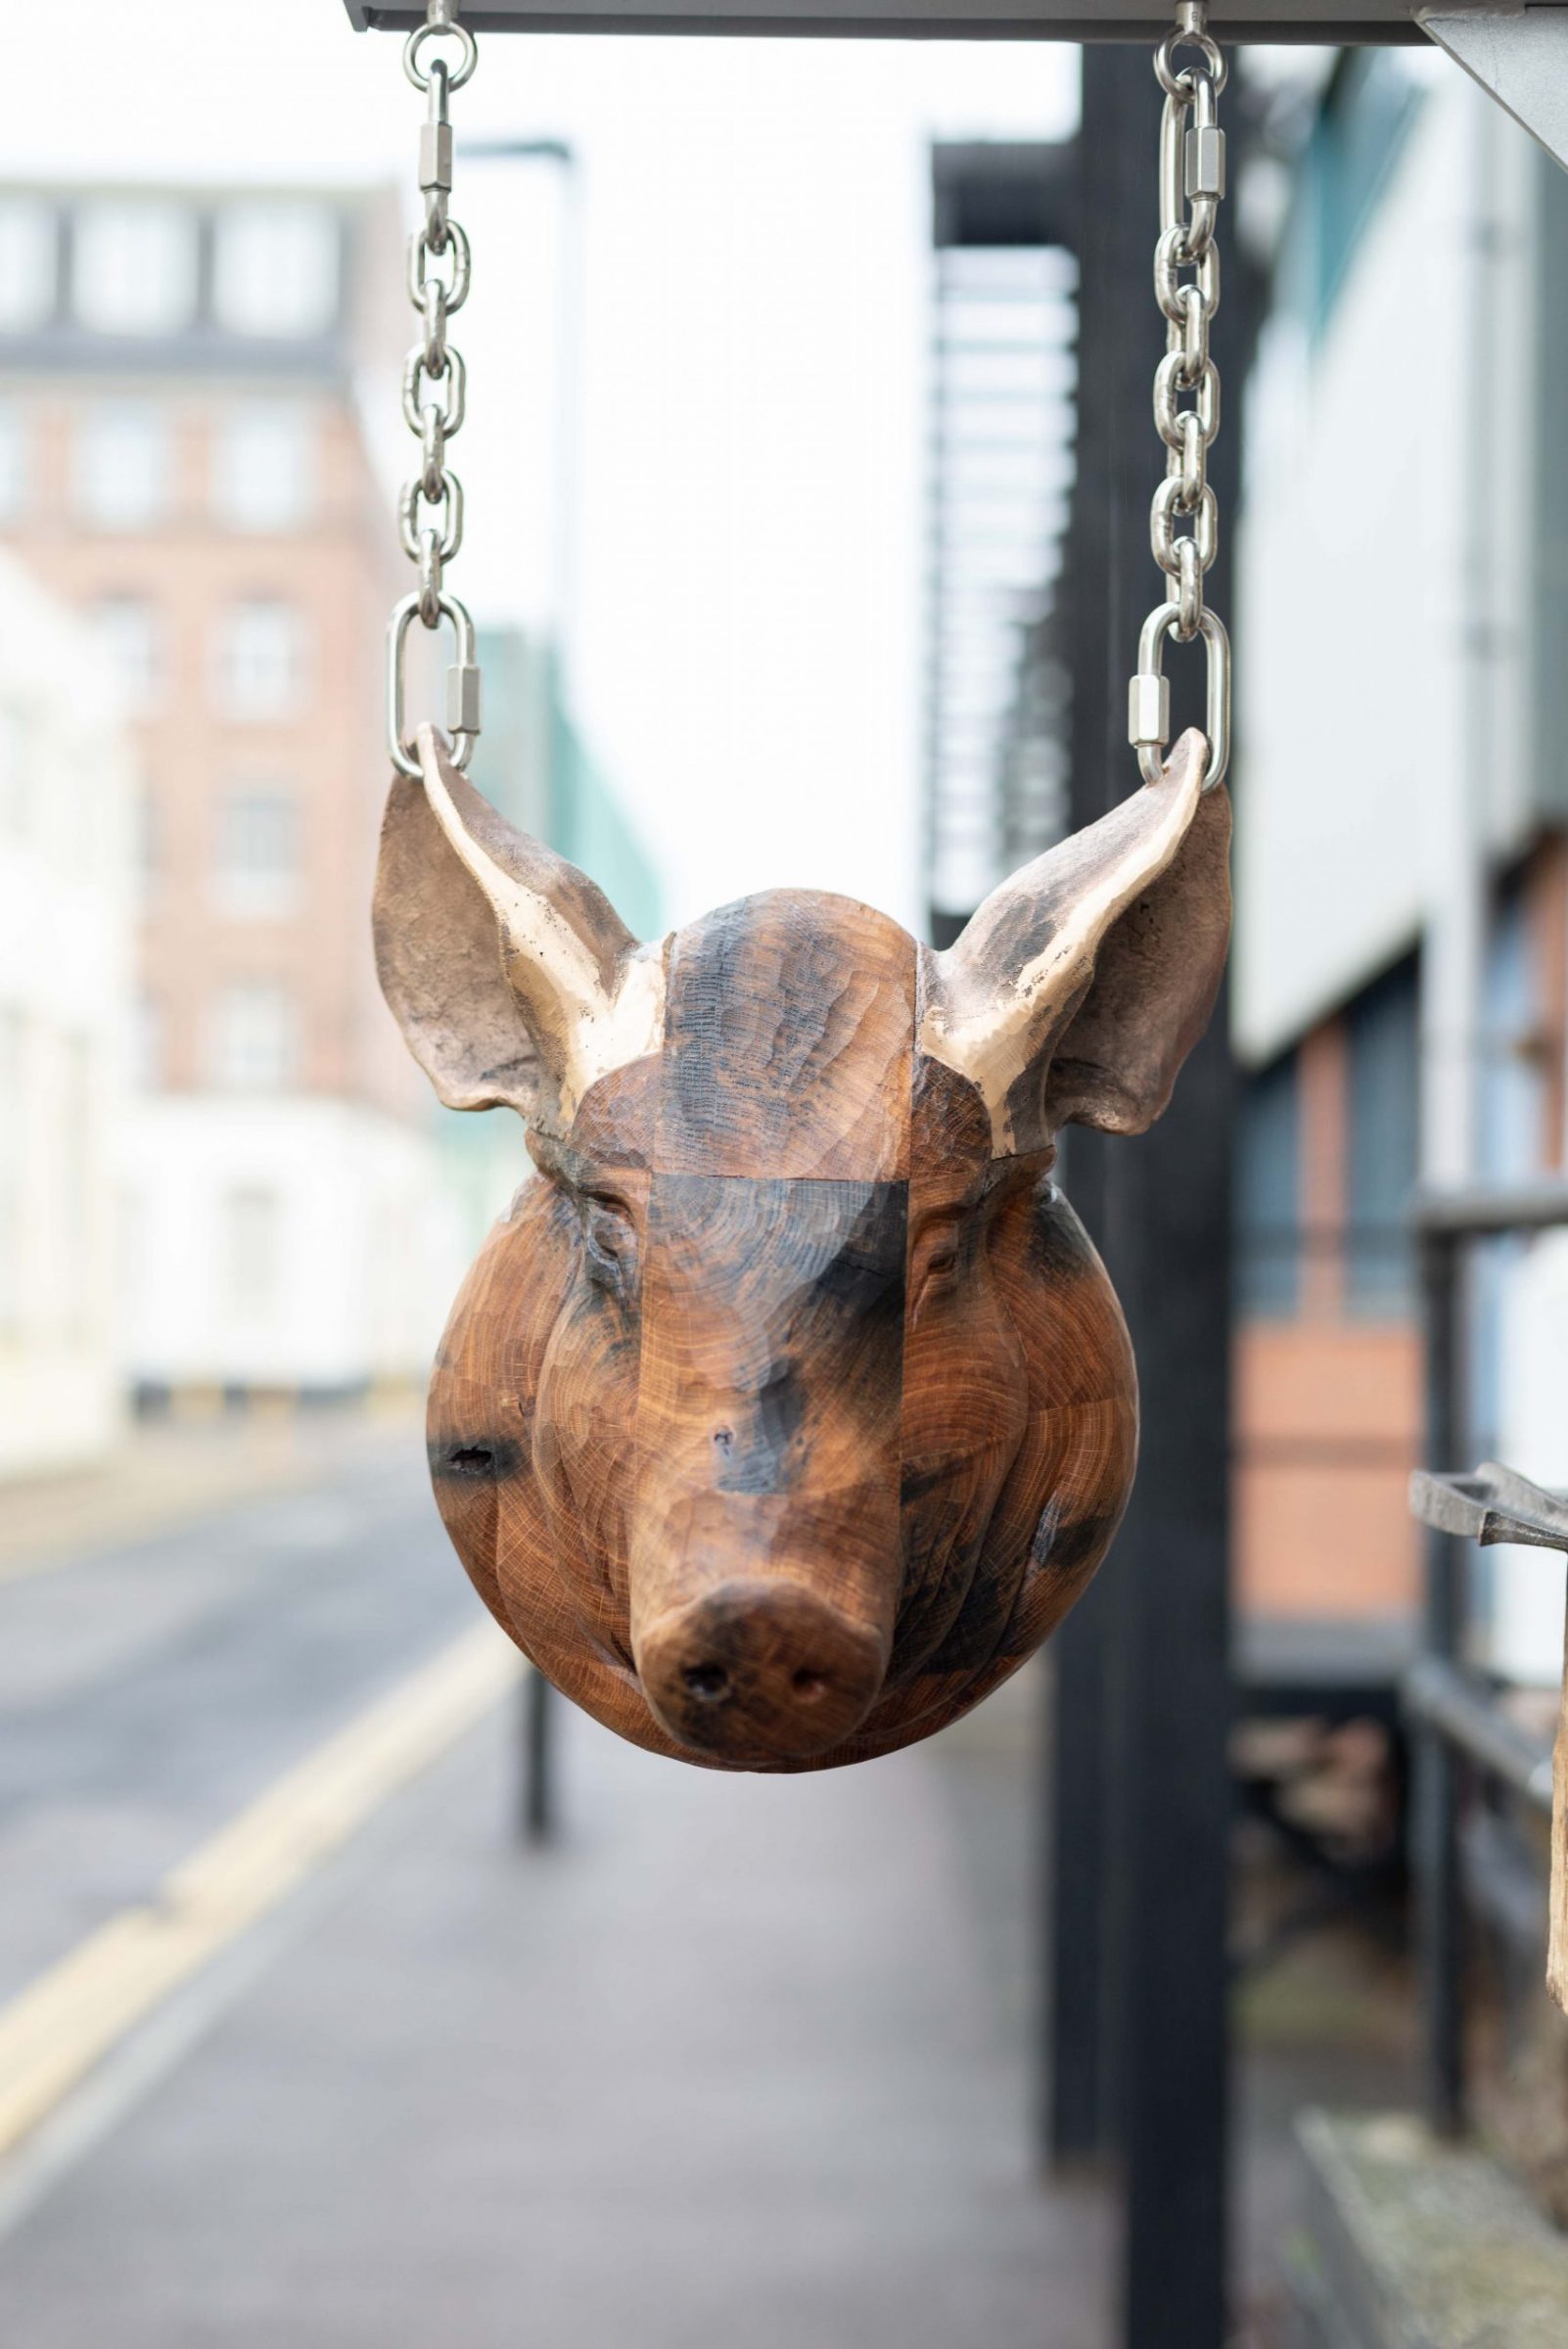 Jan Hendzel studio mantec pigs head sculpture-6-scaled